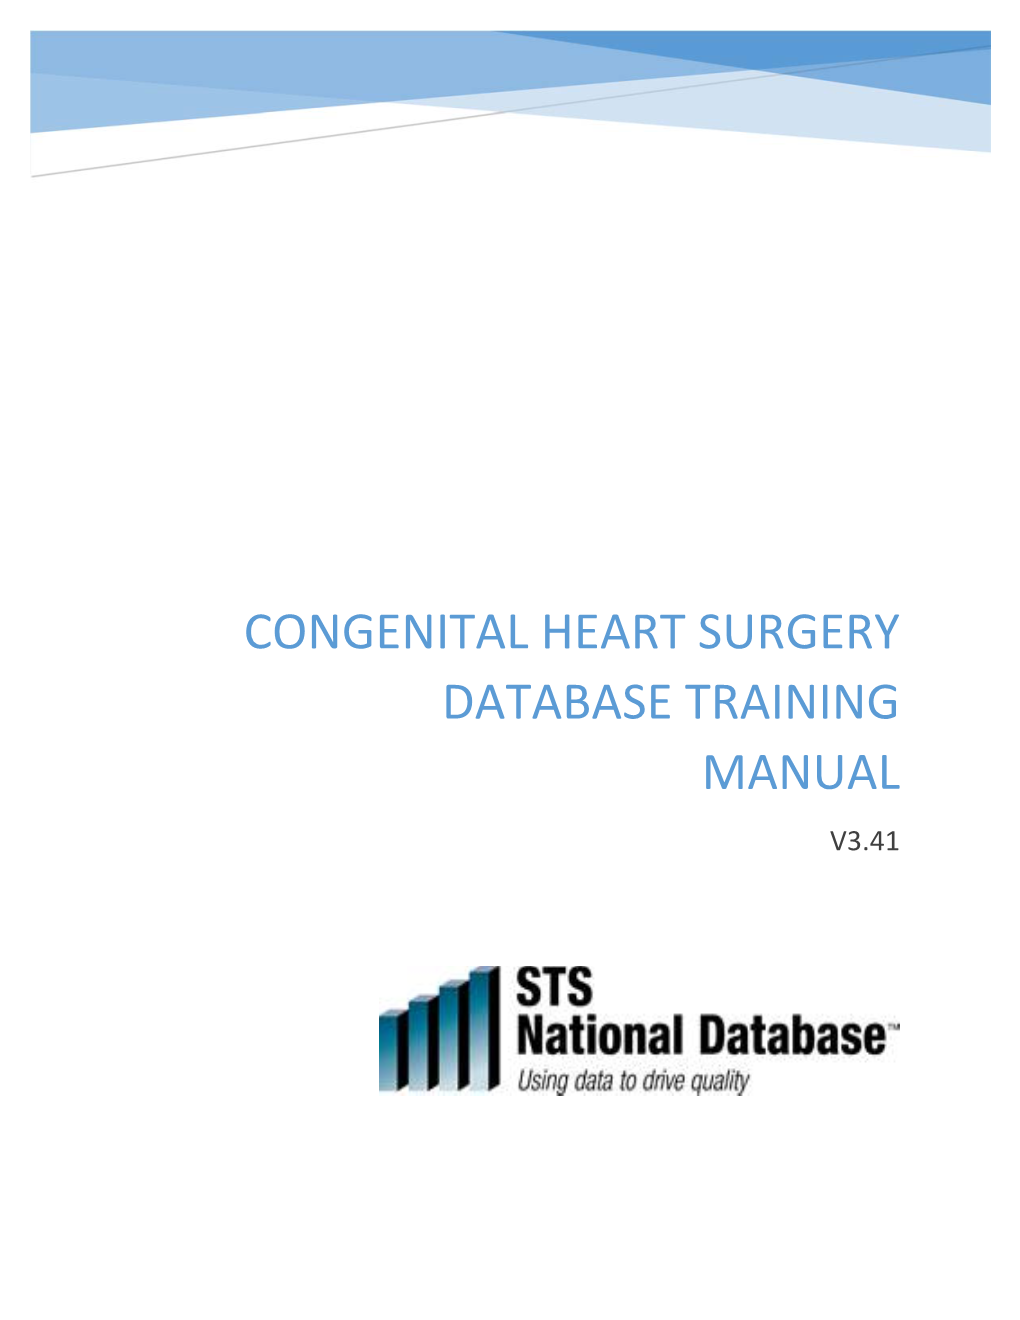 Congenital Heart Surgery Database Training Manual V3.41